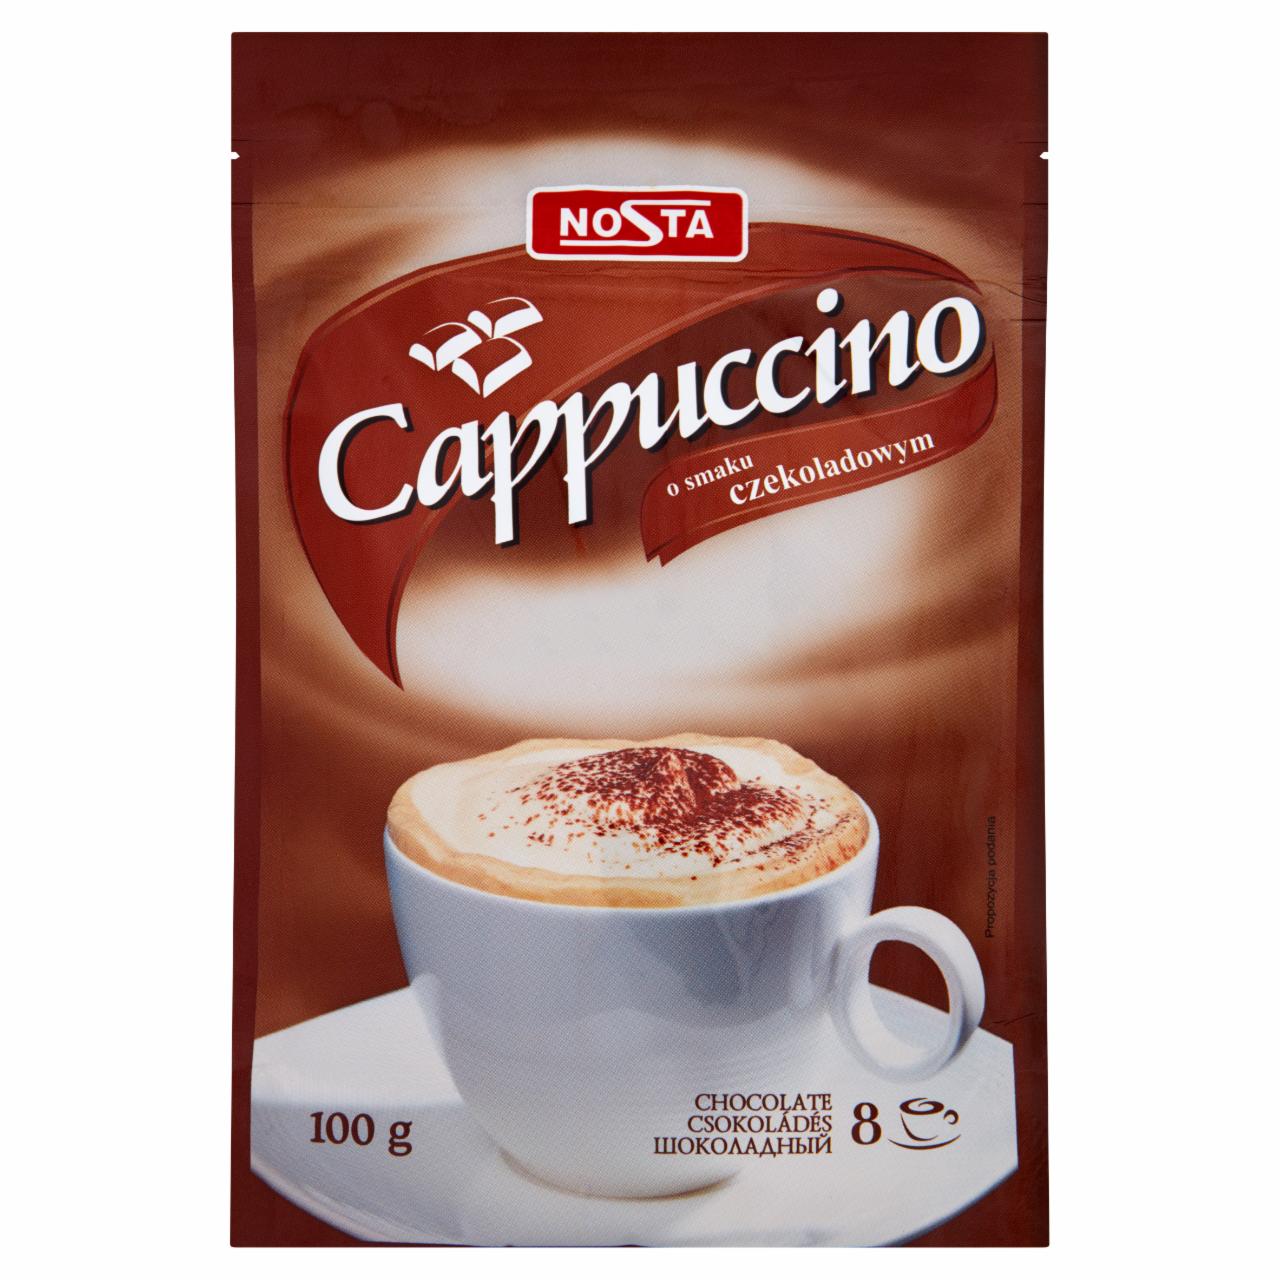 Képek - Cappuccino csokoládé Nosta